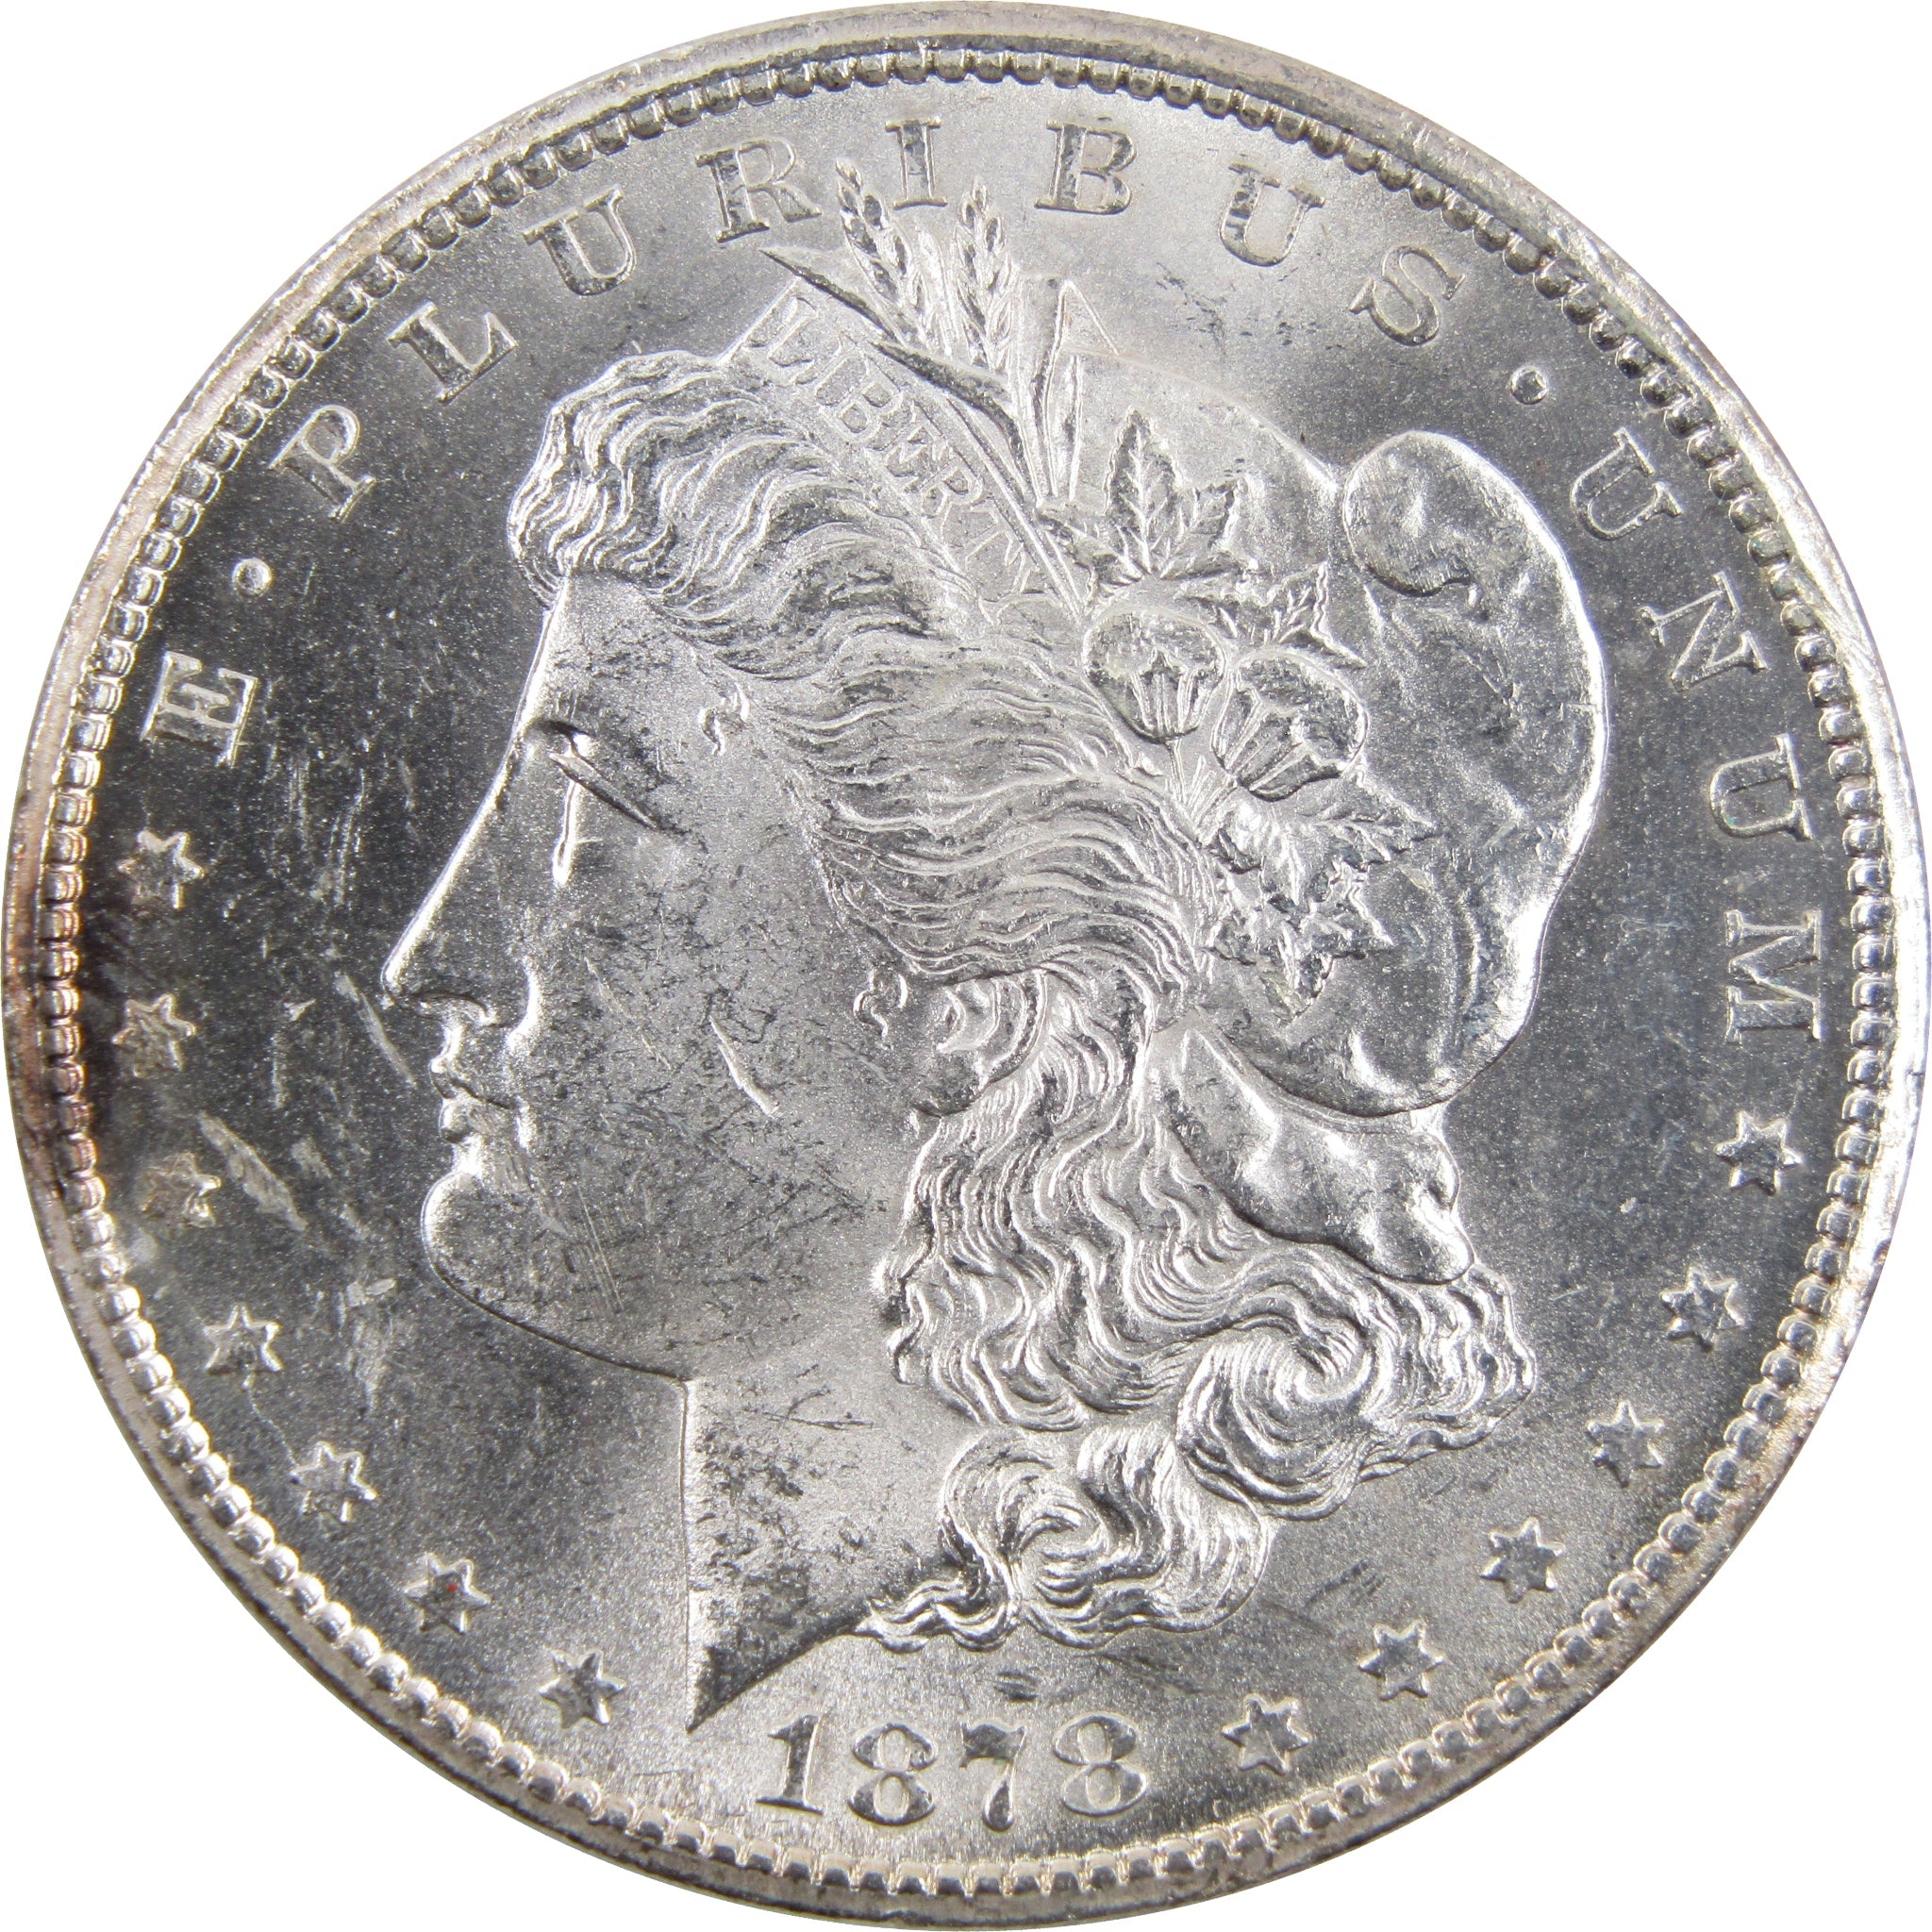 1878 CC Morgan Dollar BU Uncirculated Mint State Silver SKU:CPC2490 - Morgan coin - Morgan silver dollar - Morgan silver dollar for sale - Profile Coins &amp; Collectibles